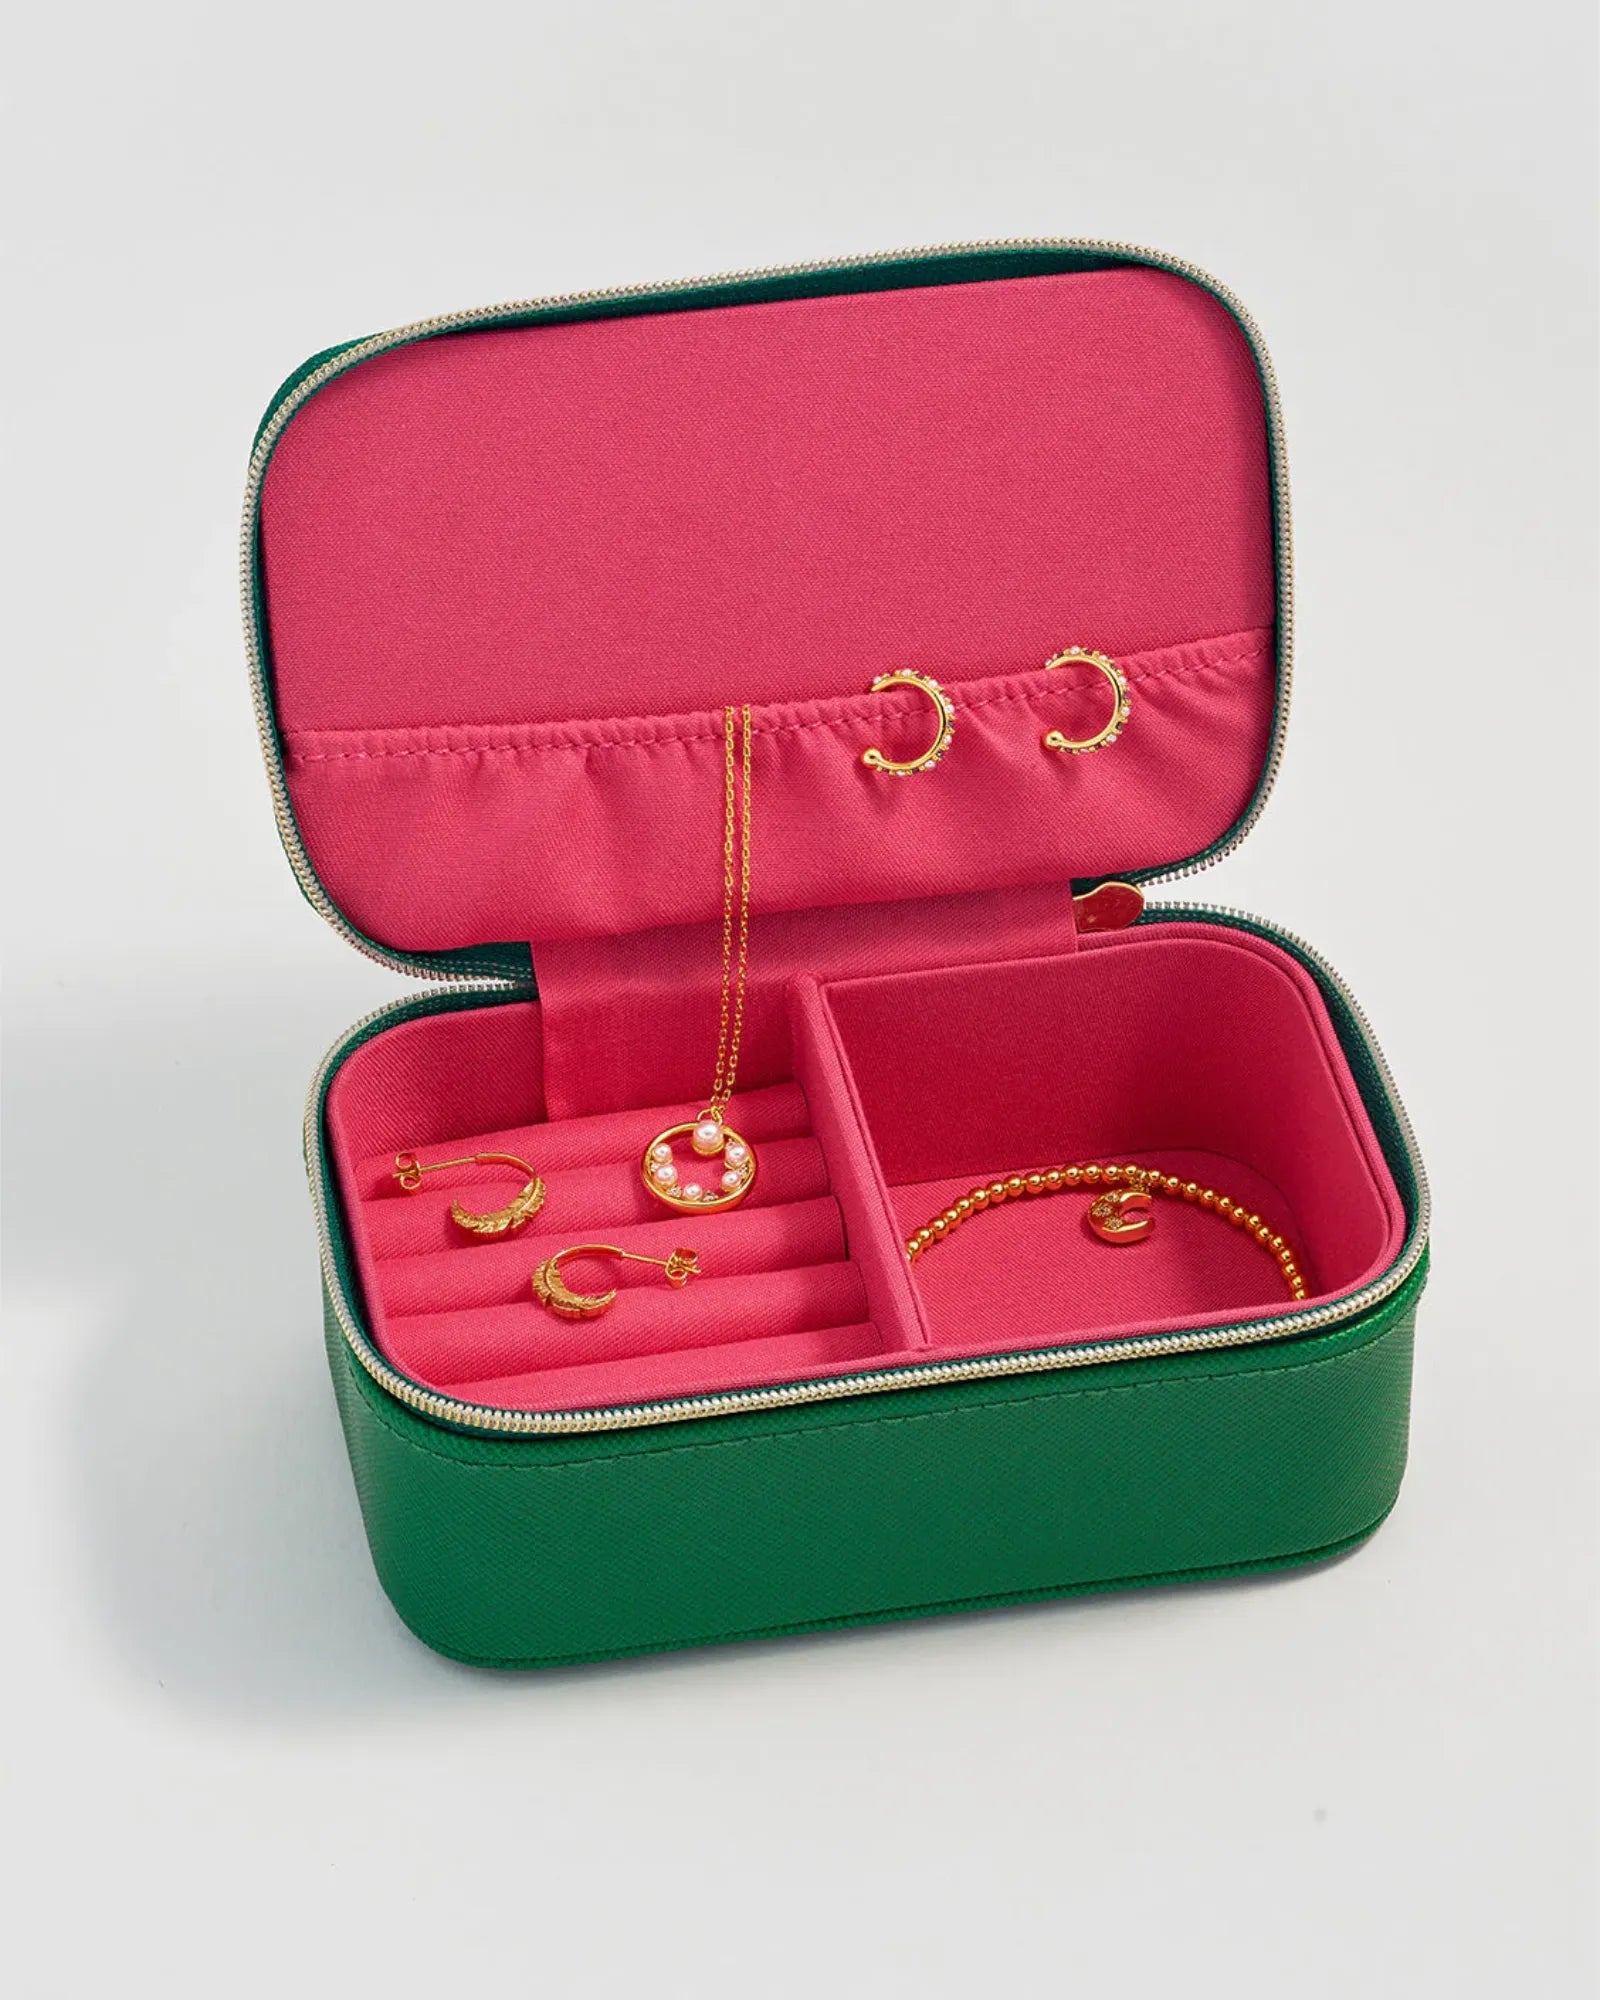 Mini Jewellery Box - Green Satin